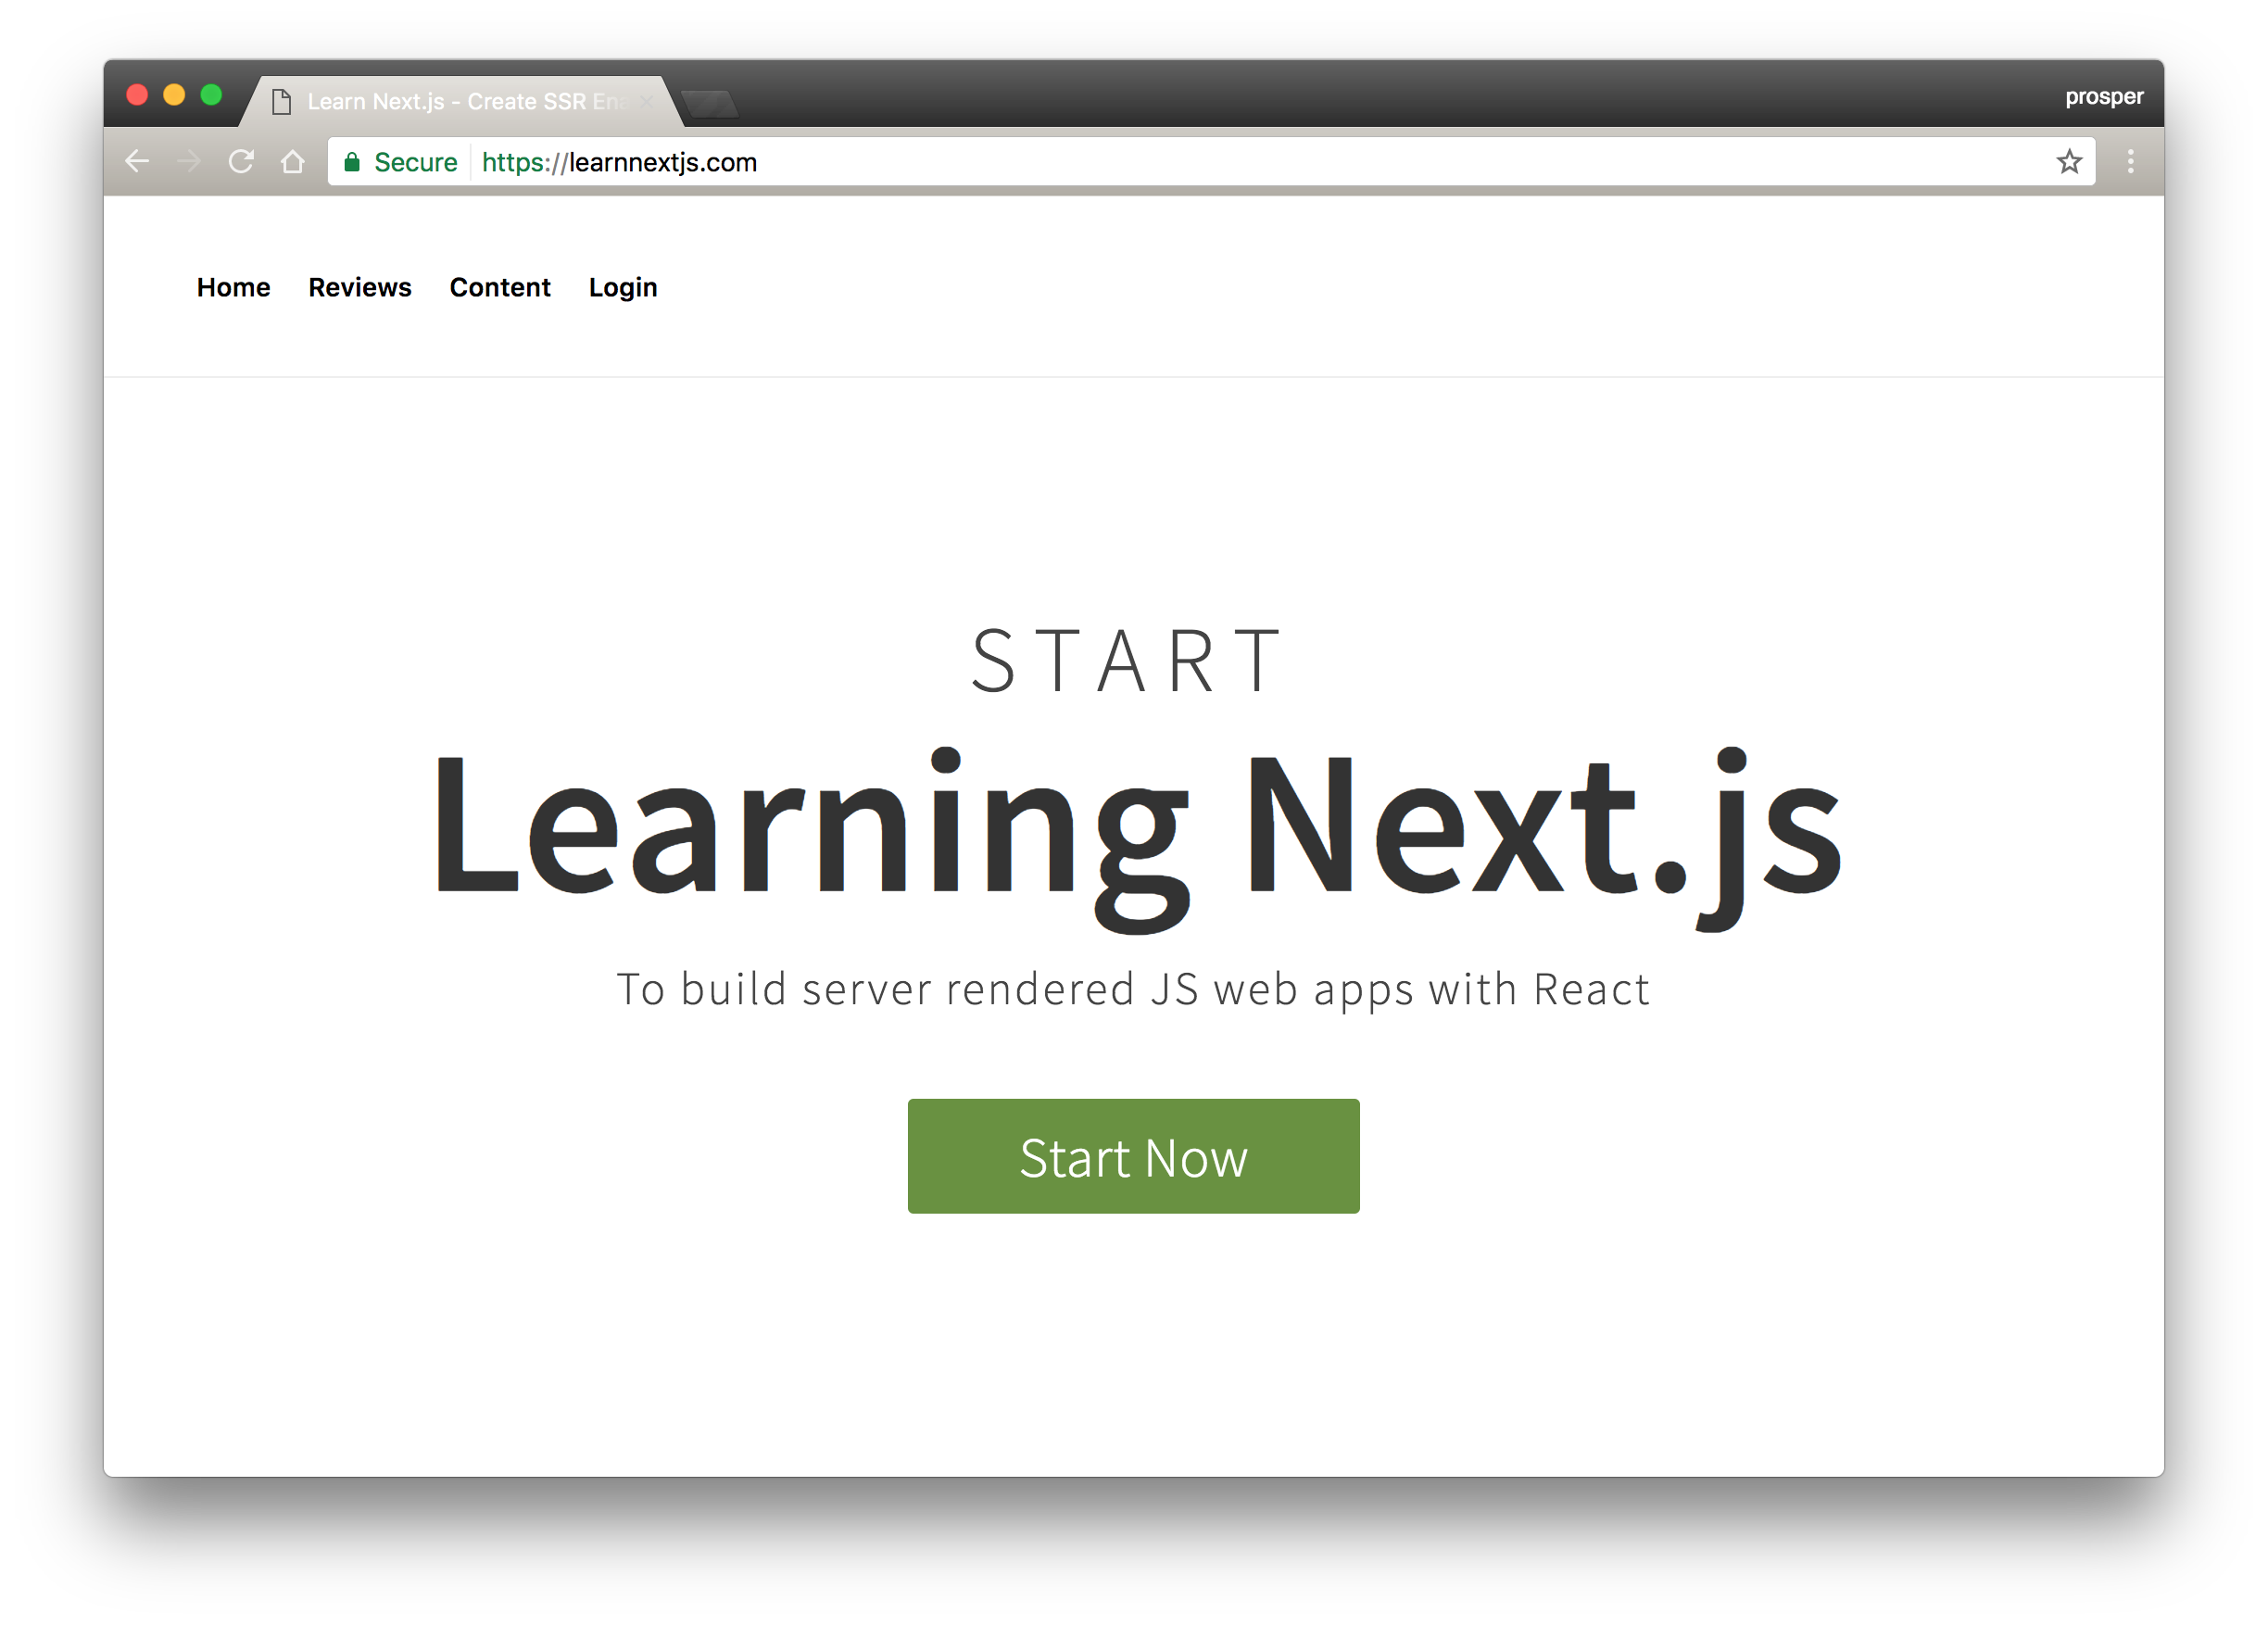 Learn Next.js